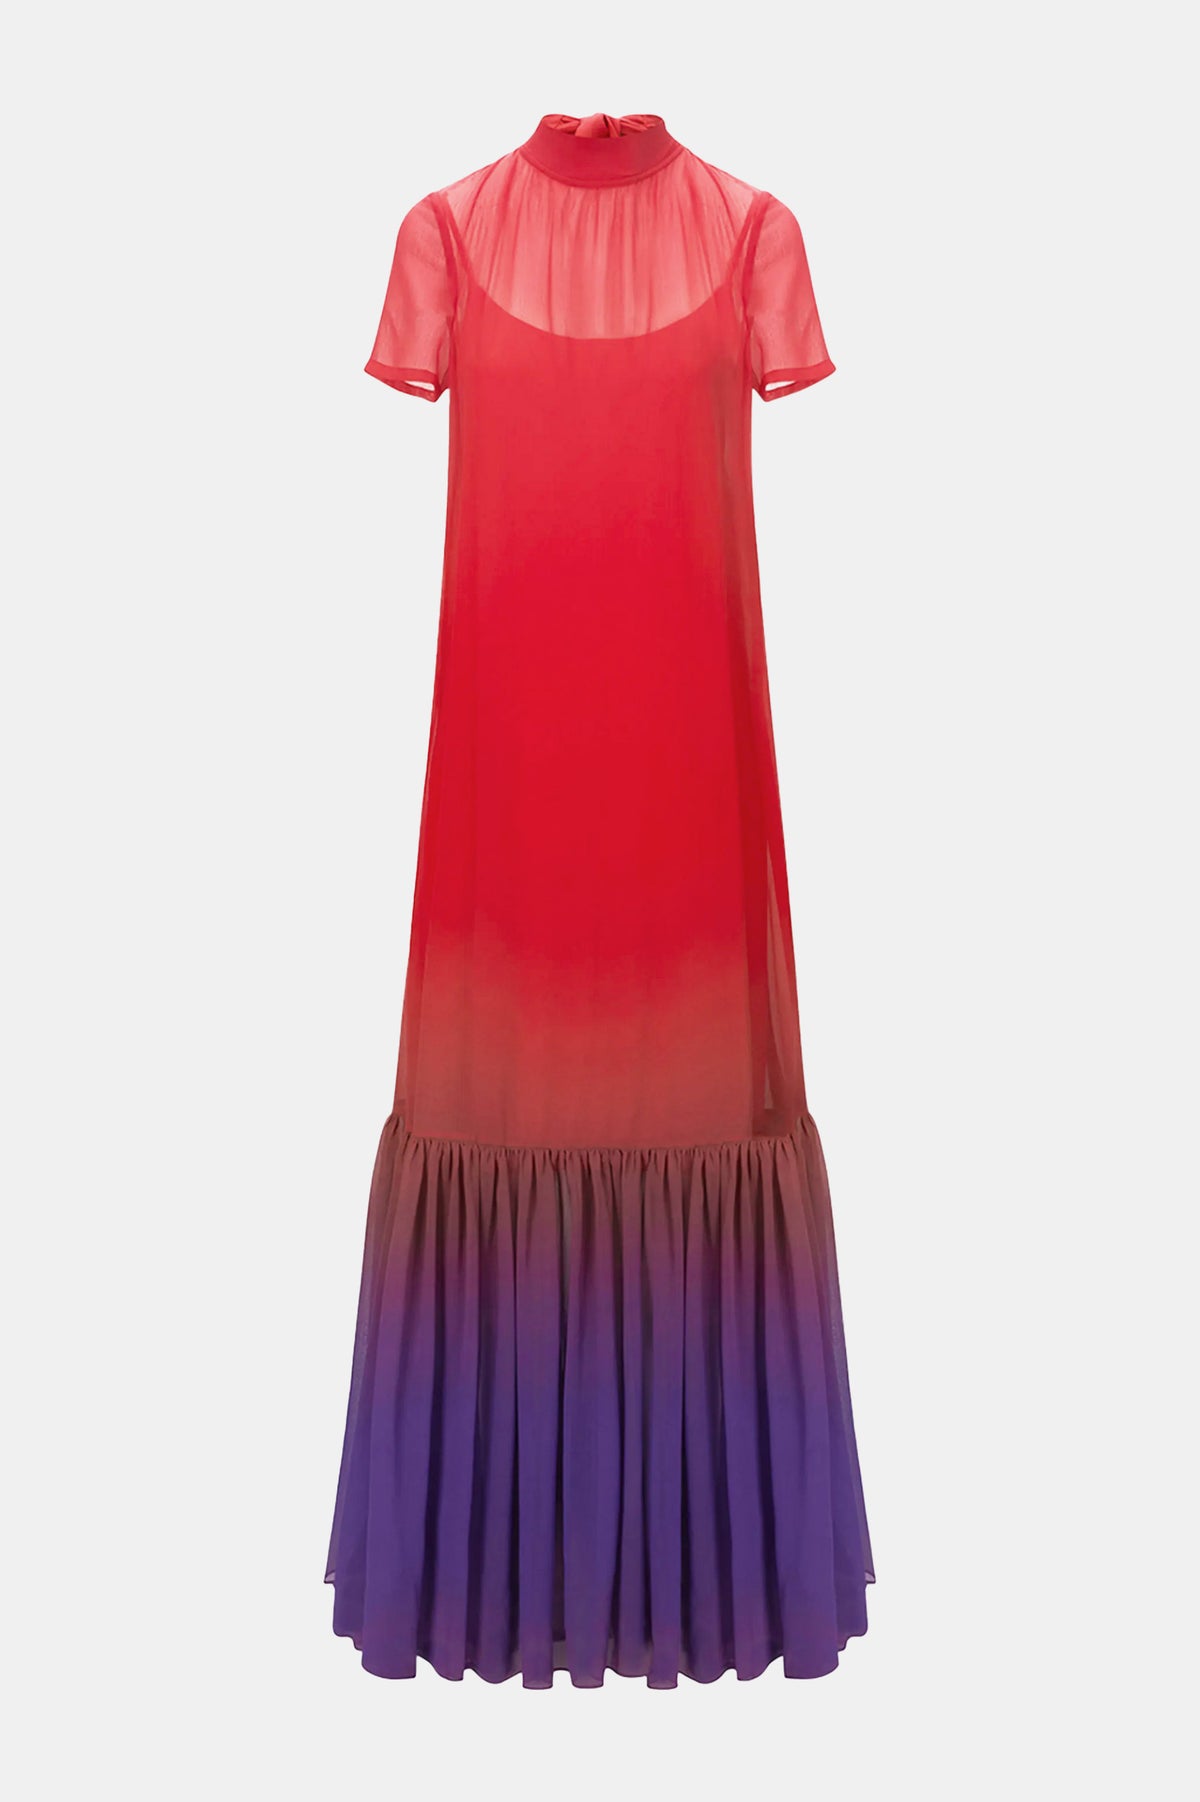 Calluna Dress in Violet Ombre